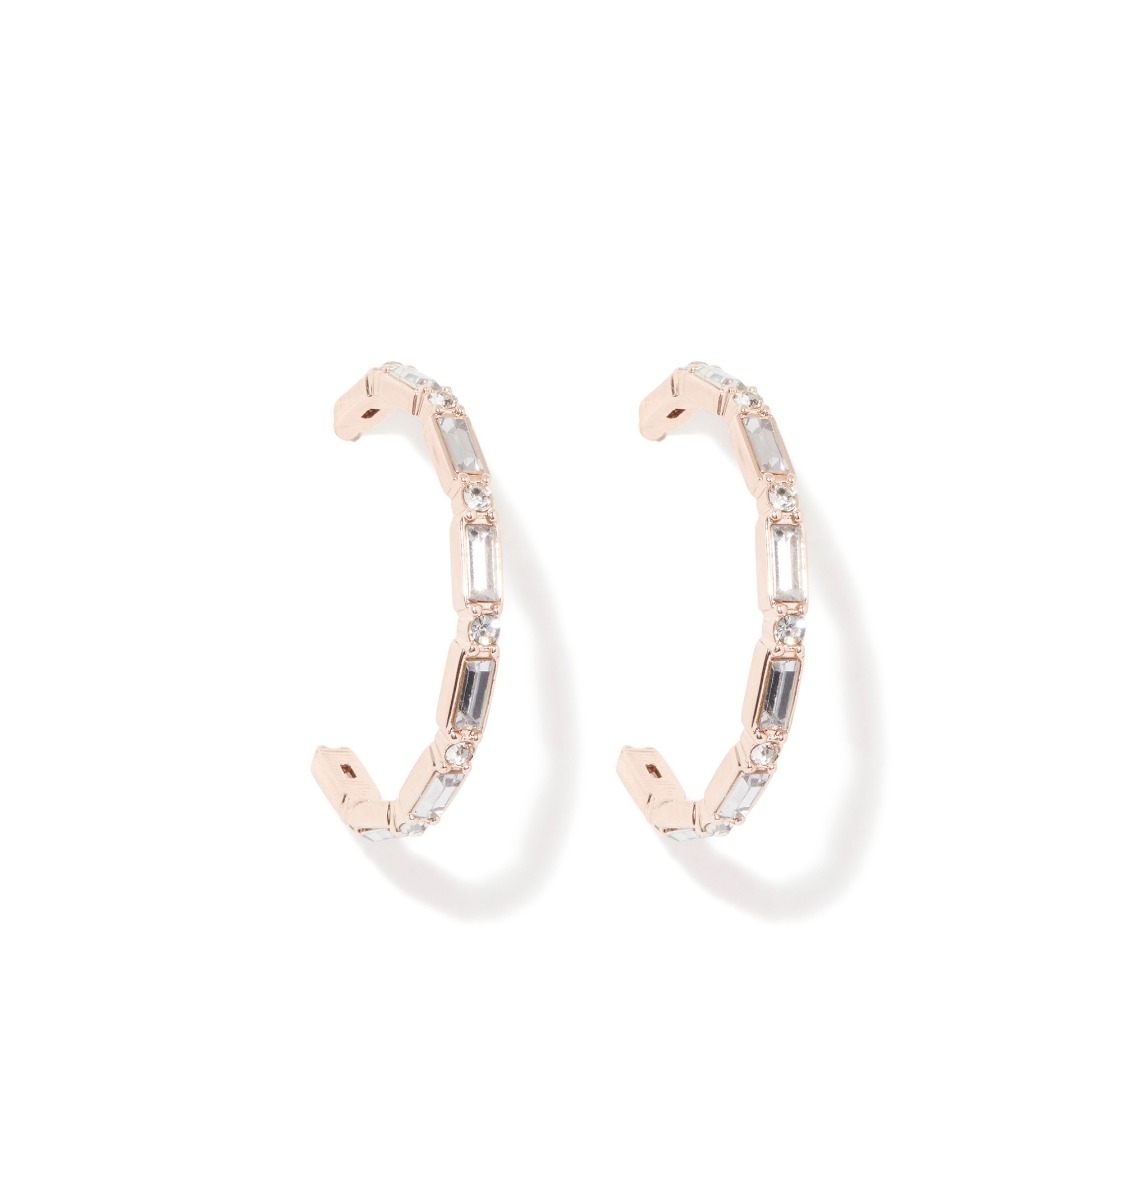 Buy Attractive Ruby Stone Hoop Earrings Designs for Women